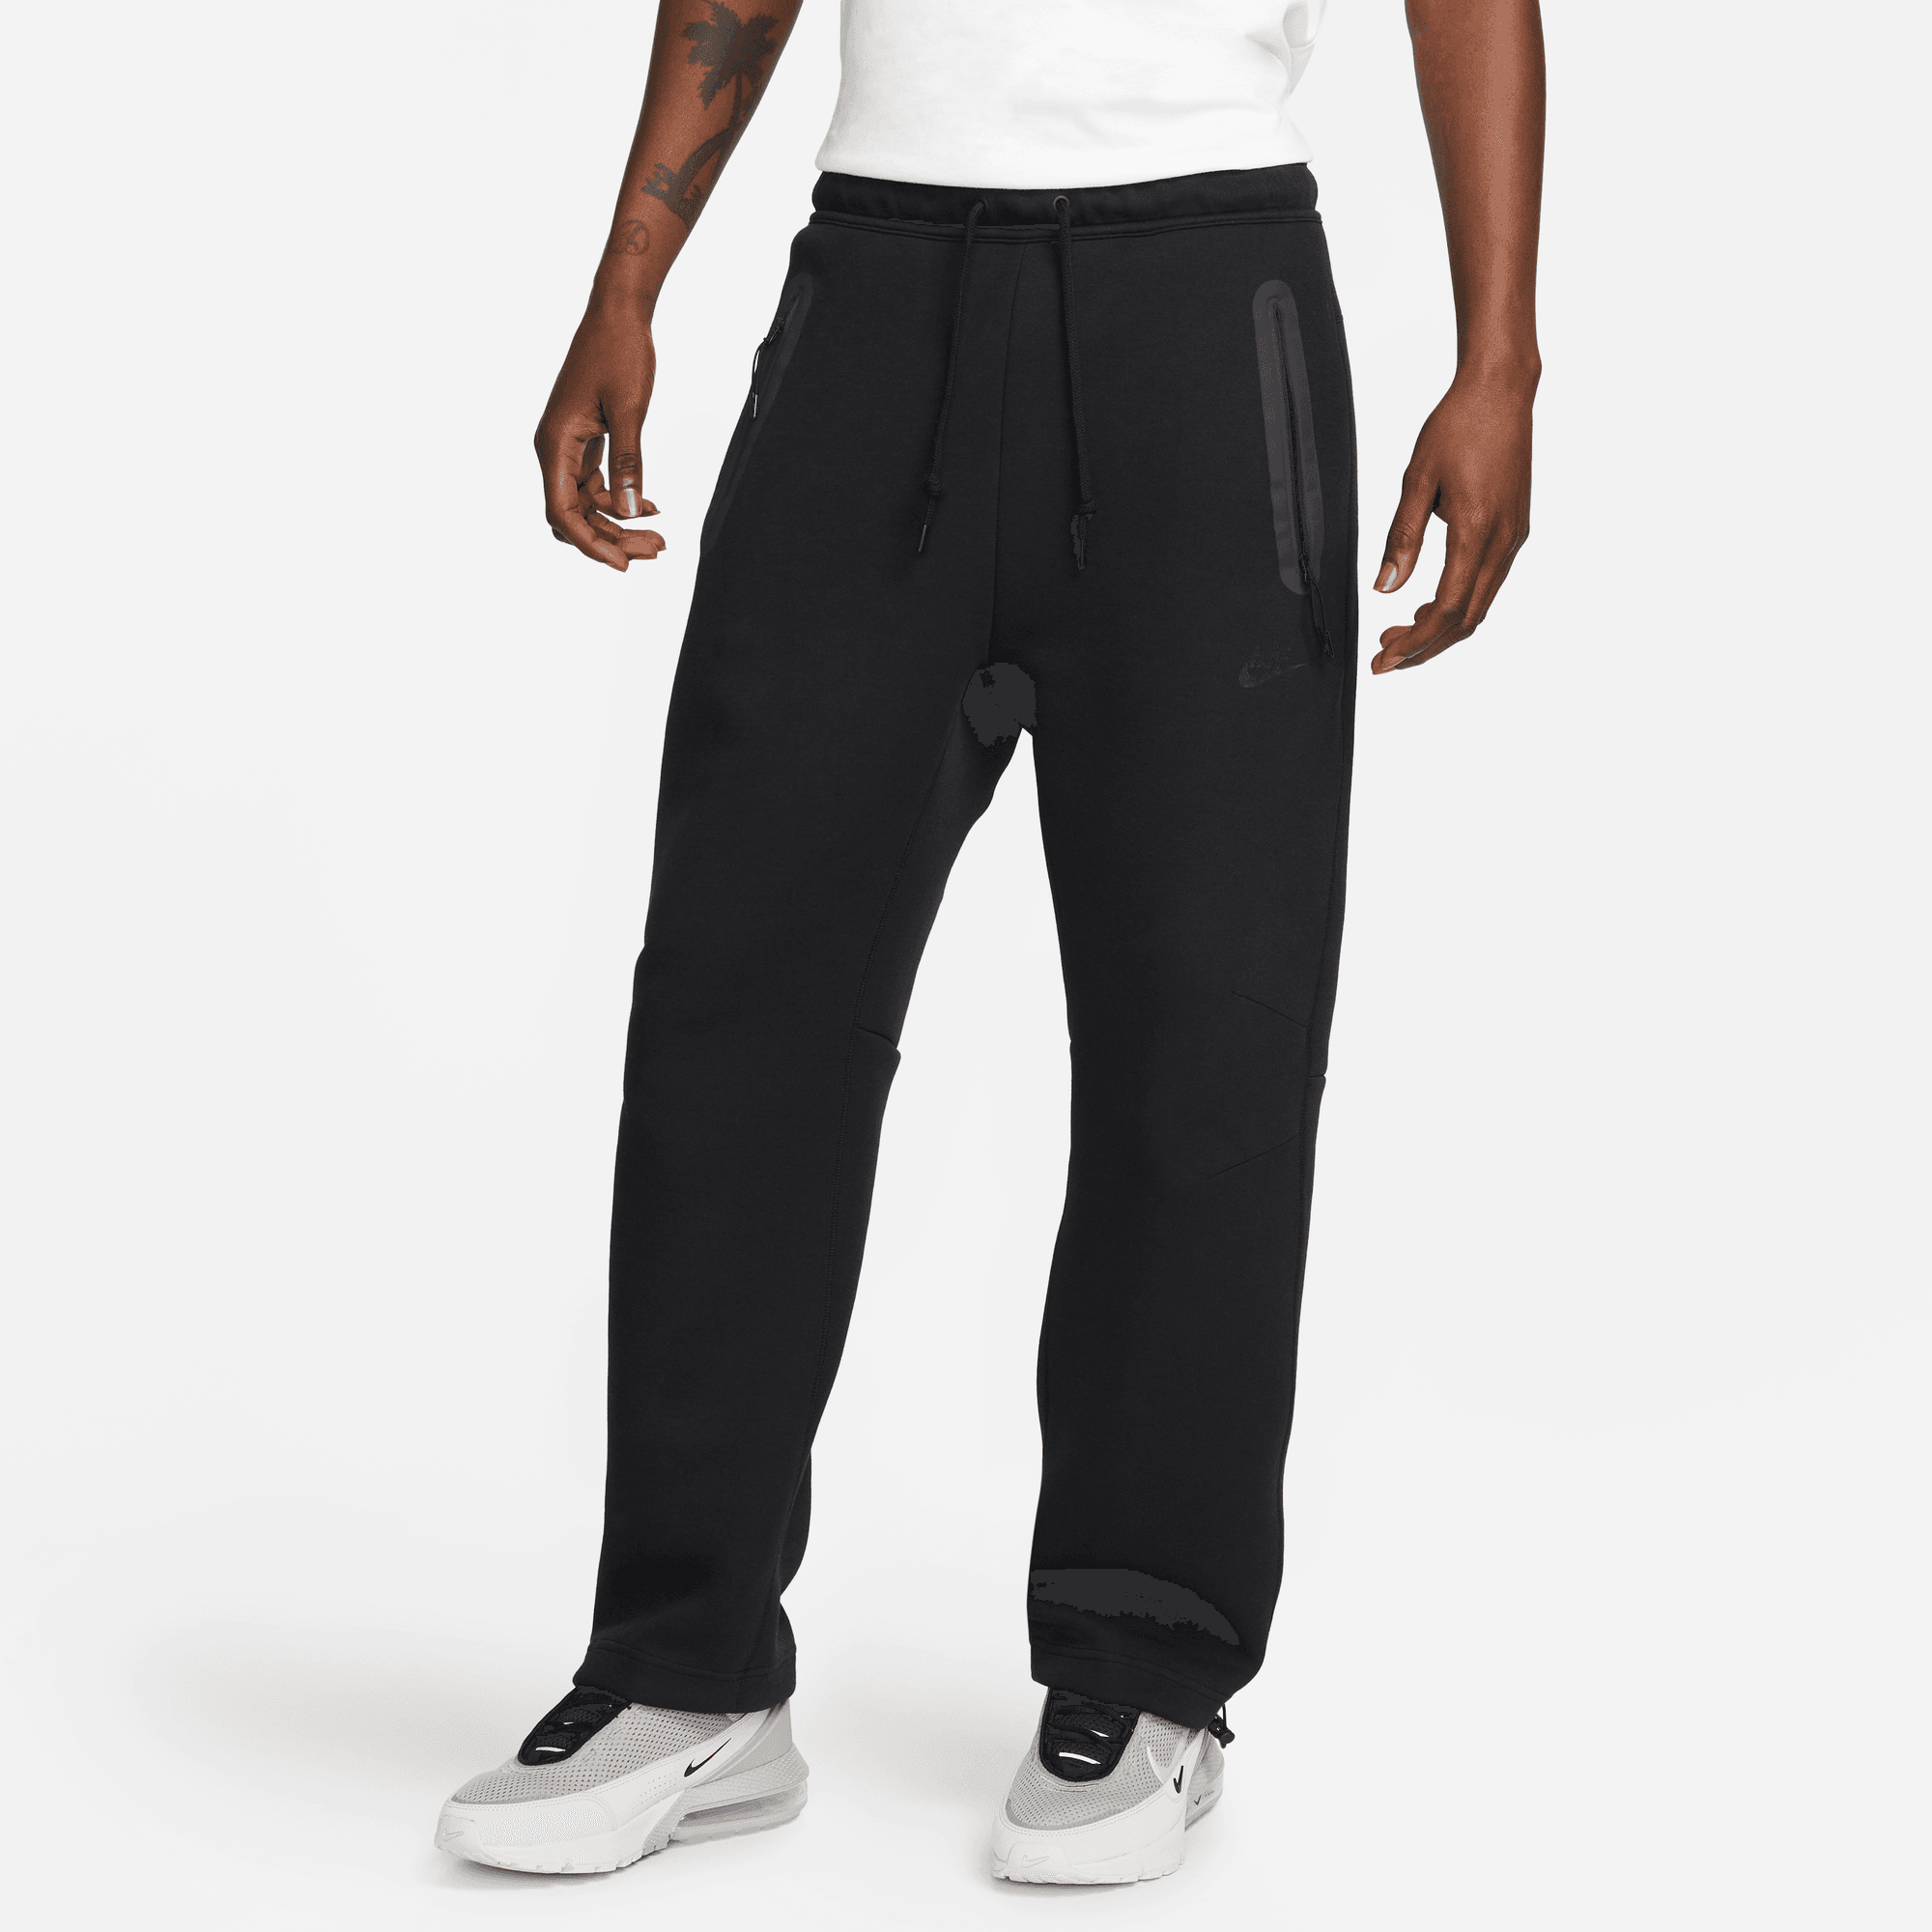  Nike Men's Sportswear Open Hem Club Pants, Black/White